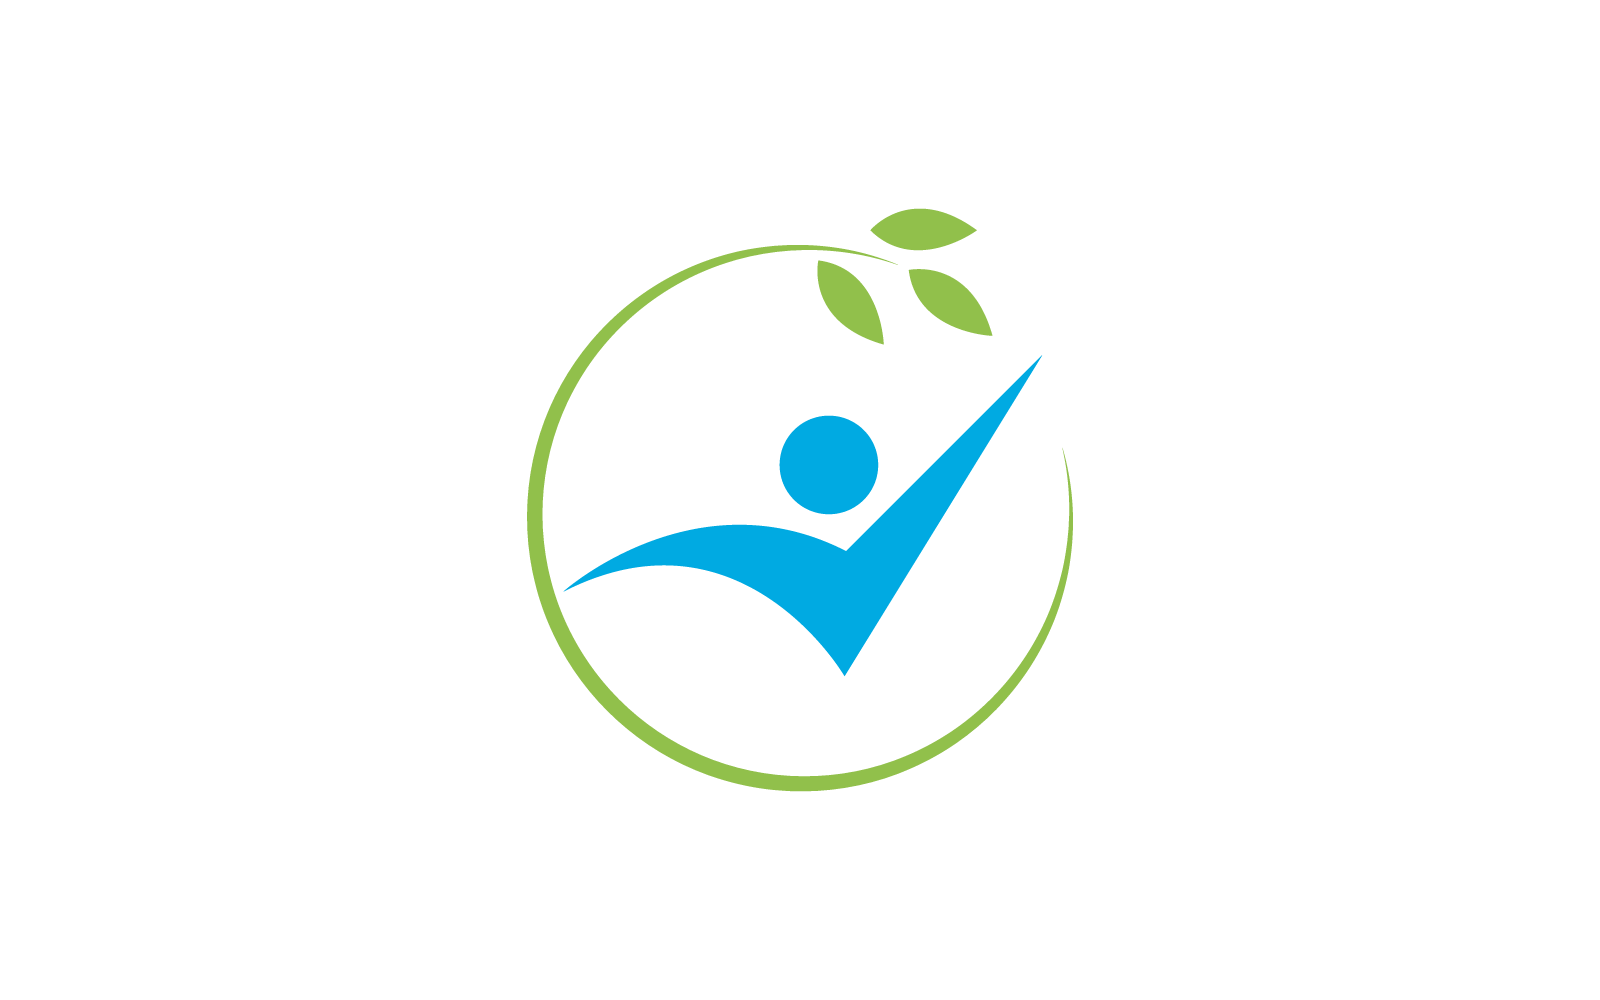 Healthy Life people logo design illustration Logo Template